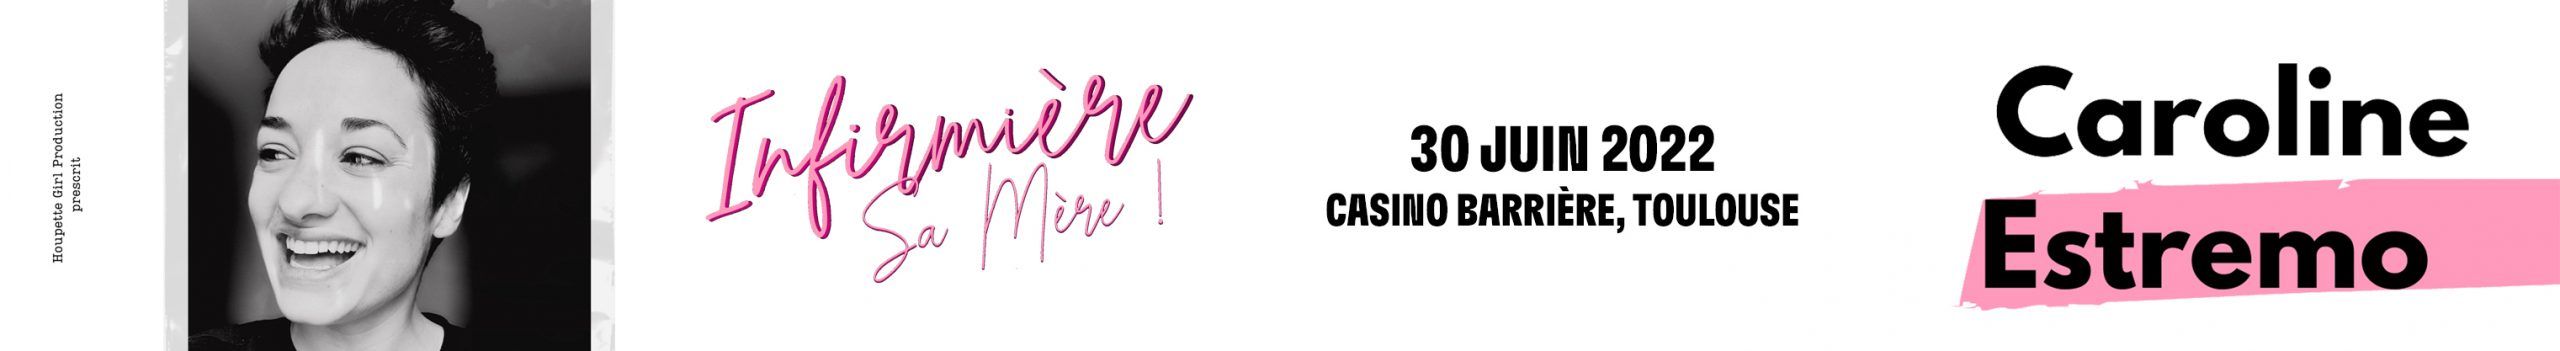 Casino Barrière Toulouse – Caroline Estremo